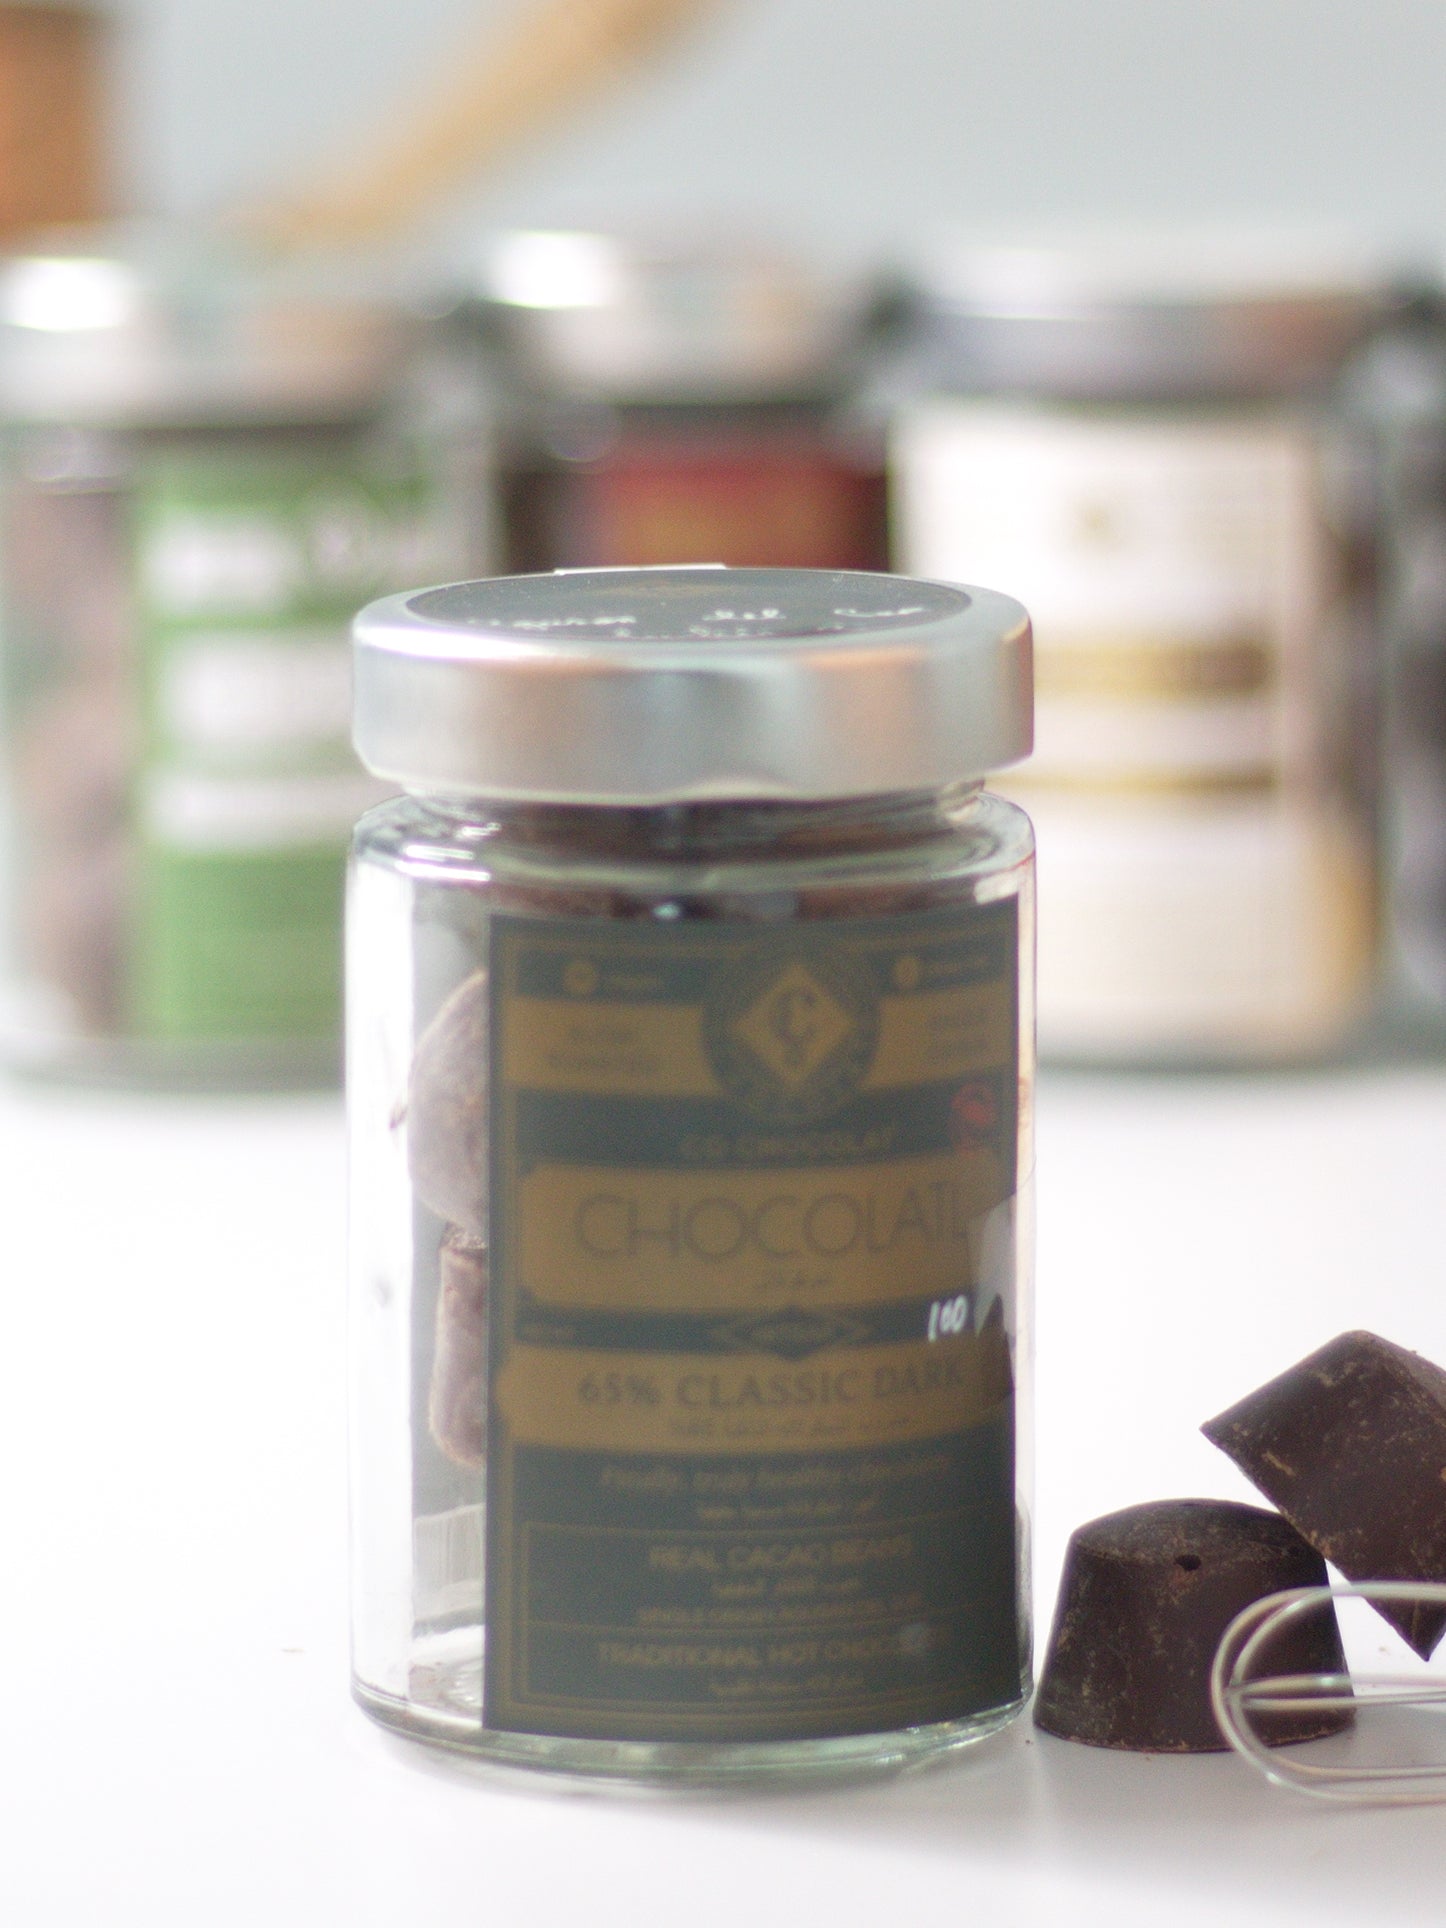 Co Chocolat 65% Classic Dark Hot Chocolate - Vegan, Gluten-Free, Nut-free 100g Jar